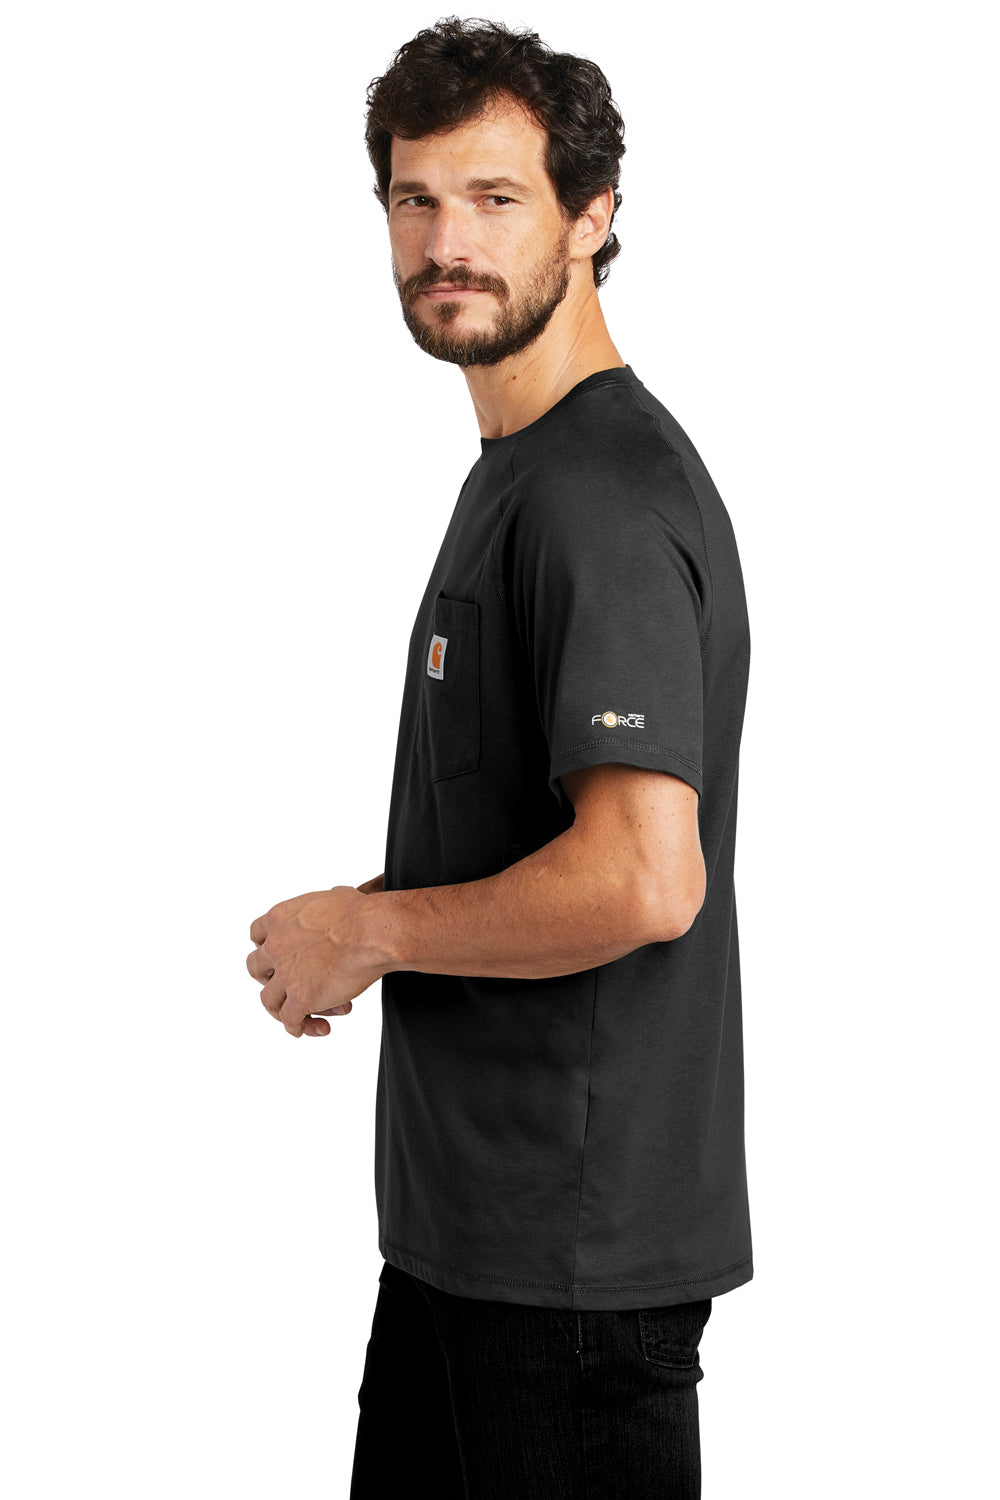 Carhartt CT100410 Mens Delmont Moisture Wicking Short Sleeve Crewneck T-Shirt w/ Pocket Black Side